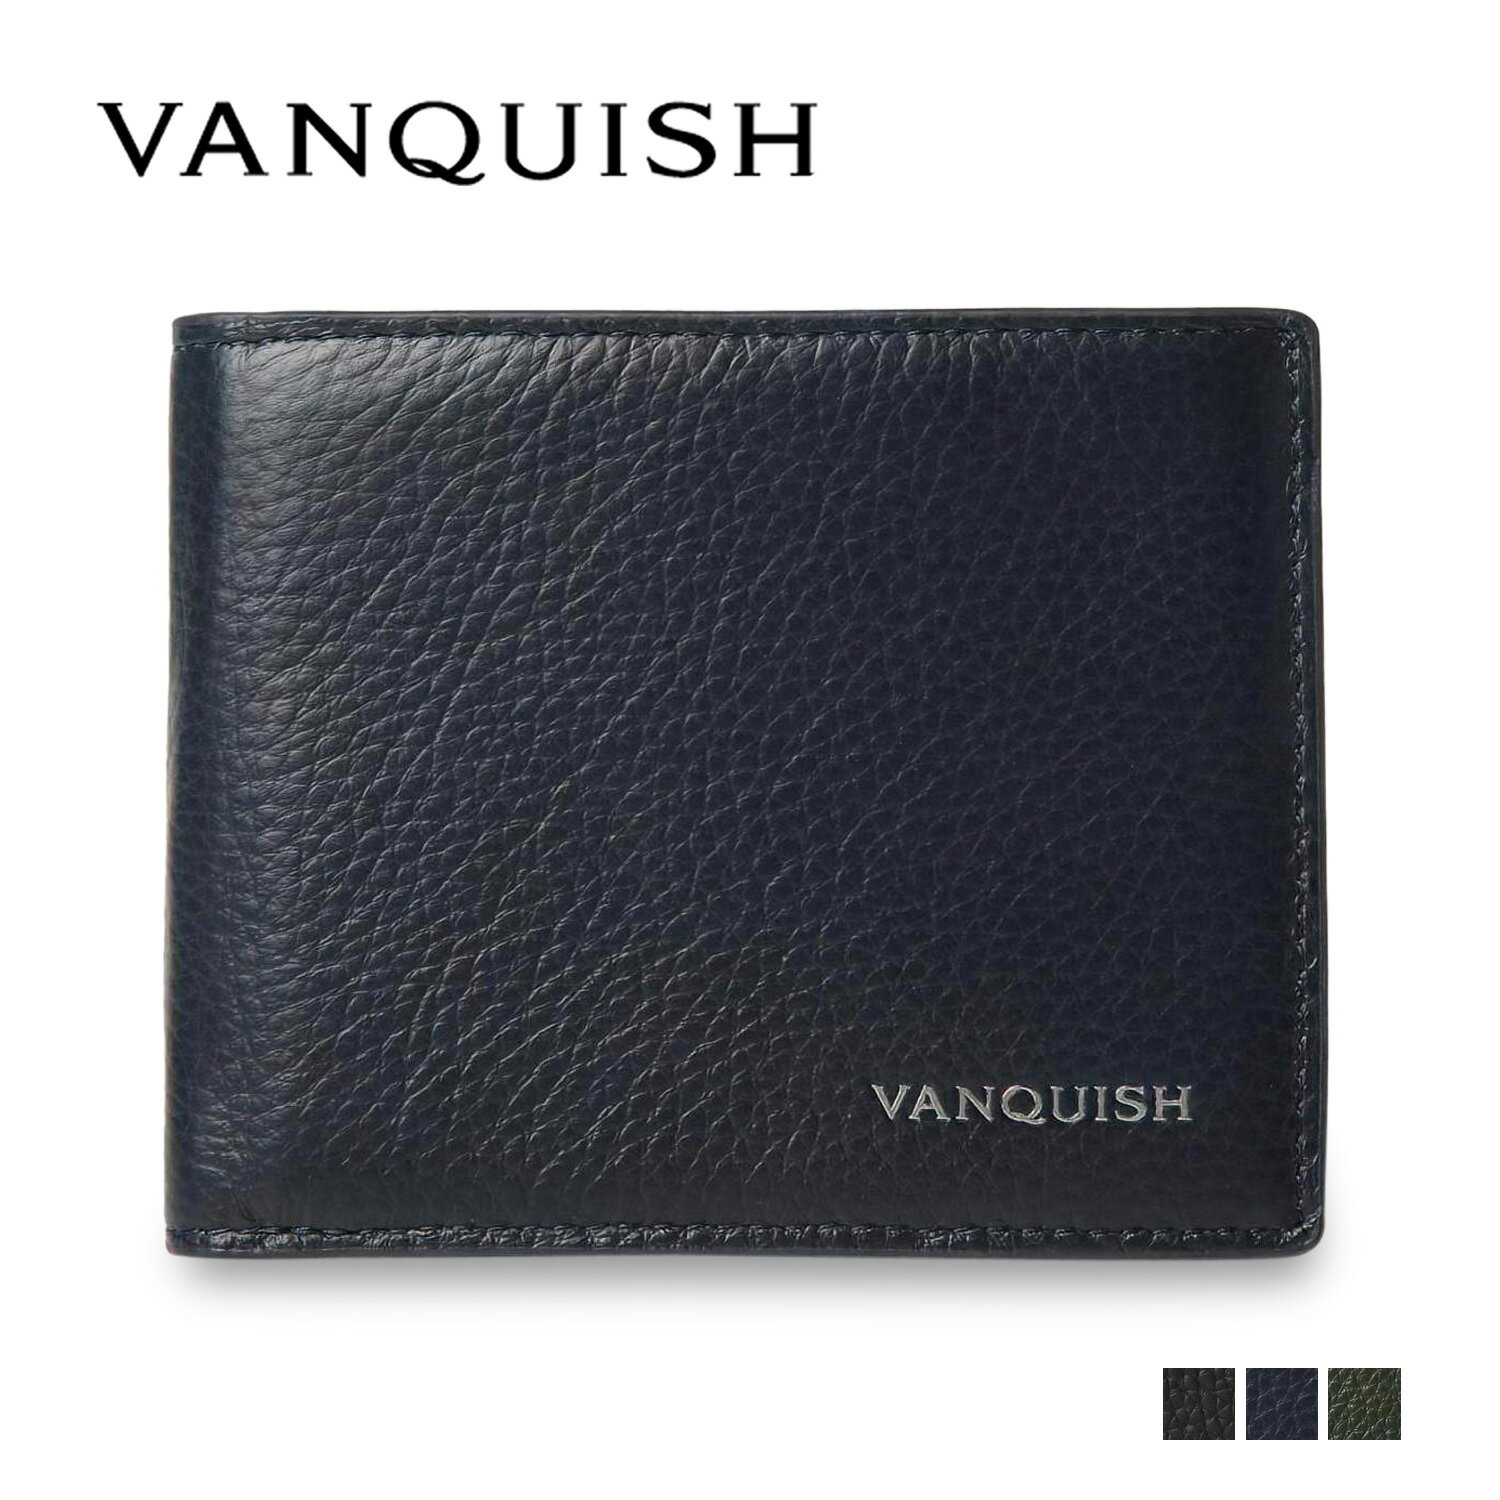 VANQUISH ヴァンキッシュ 二つ折り財布 メンズ 本革 WALLET ブラック ネイビー ダーク グリーン 黒 43520